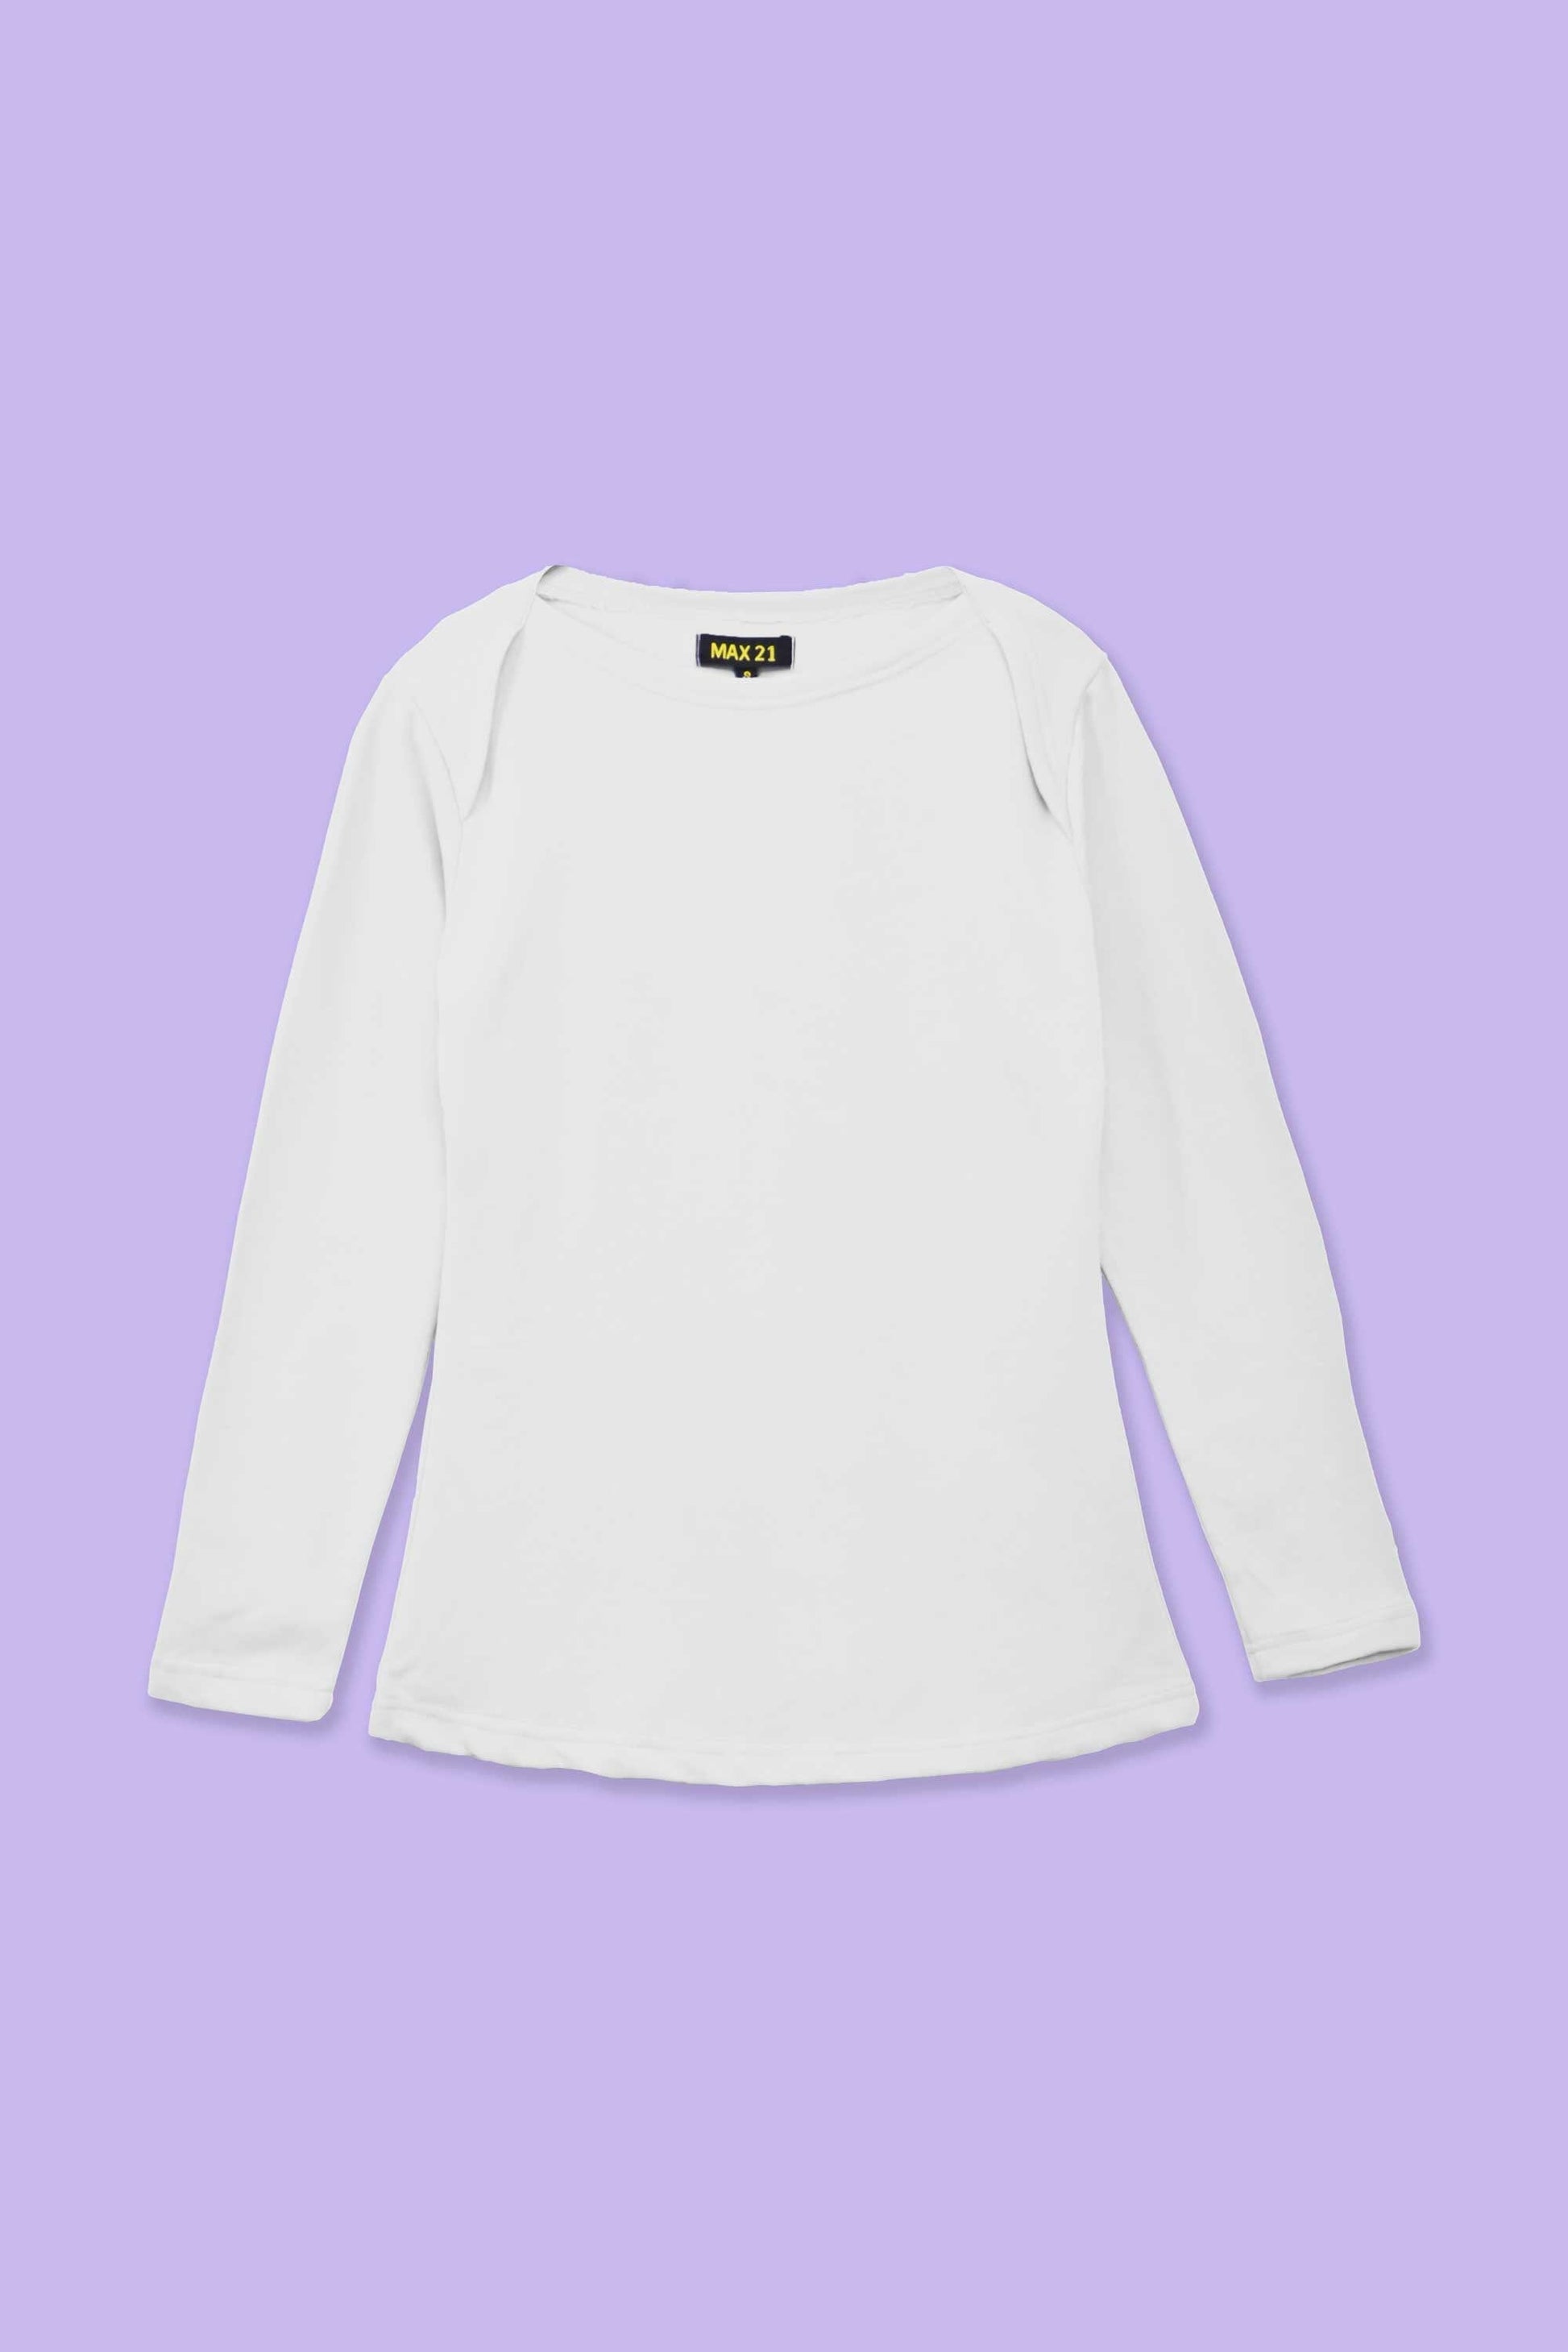 Max 21 Women’s Stylish Long Sleeves Sweat Shirt Women's Casual Shirt SZK White S 